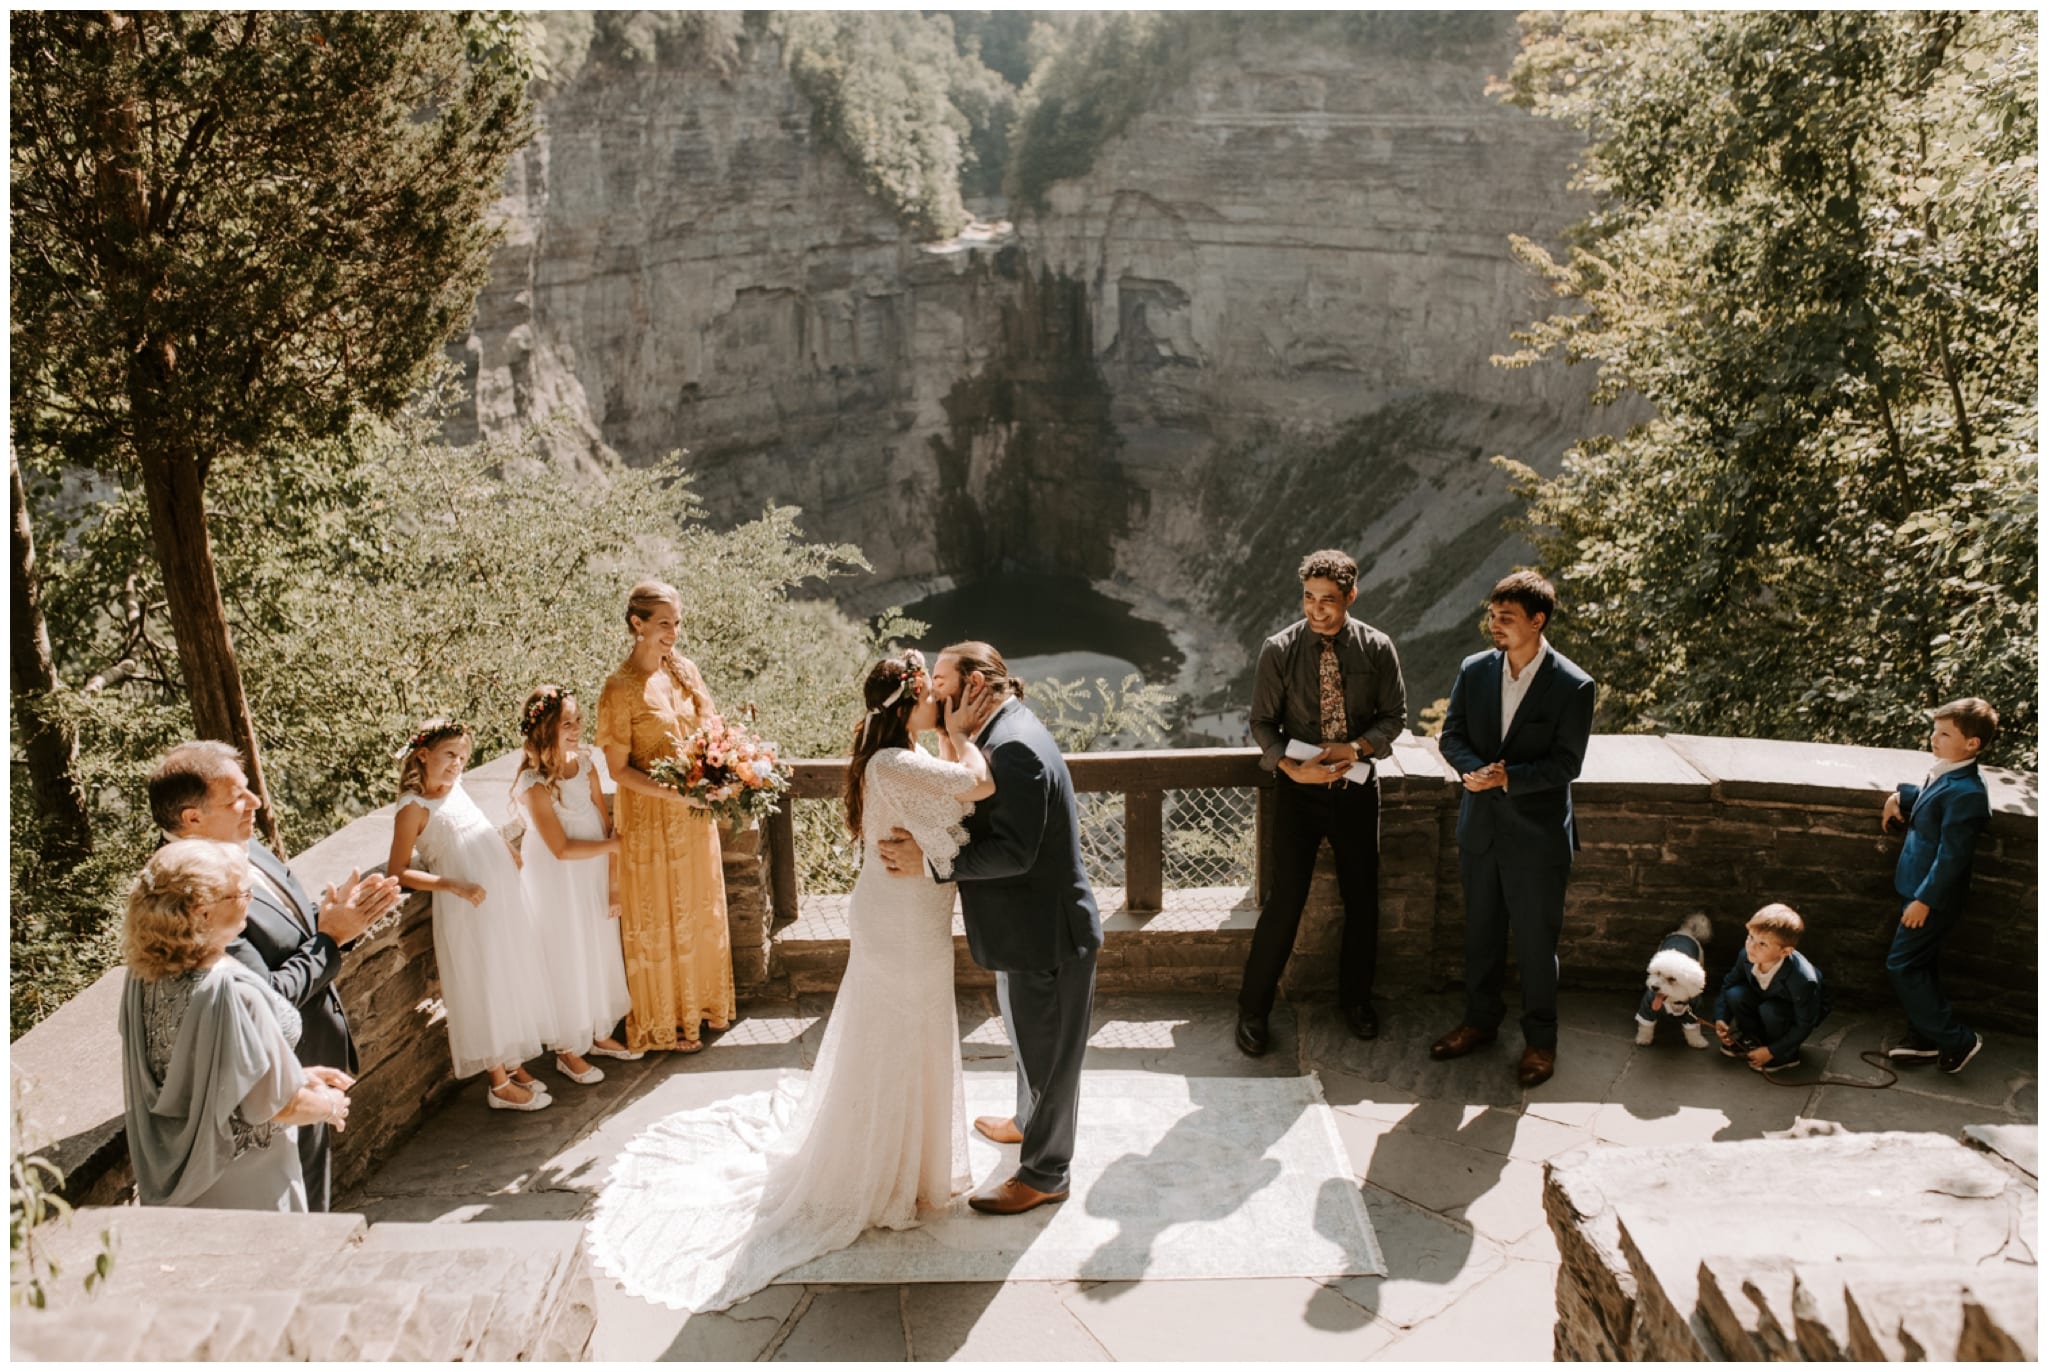 Taughannock Falls Overlook wedding in Ithaca Ny